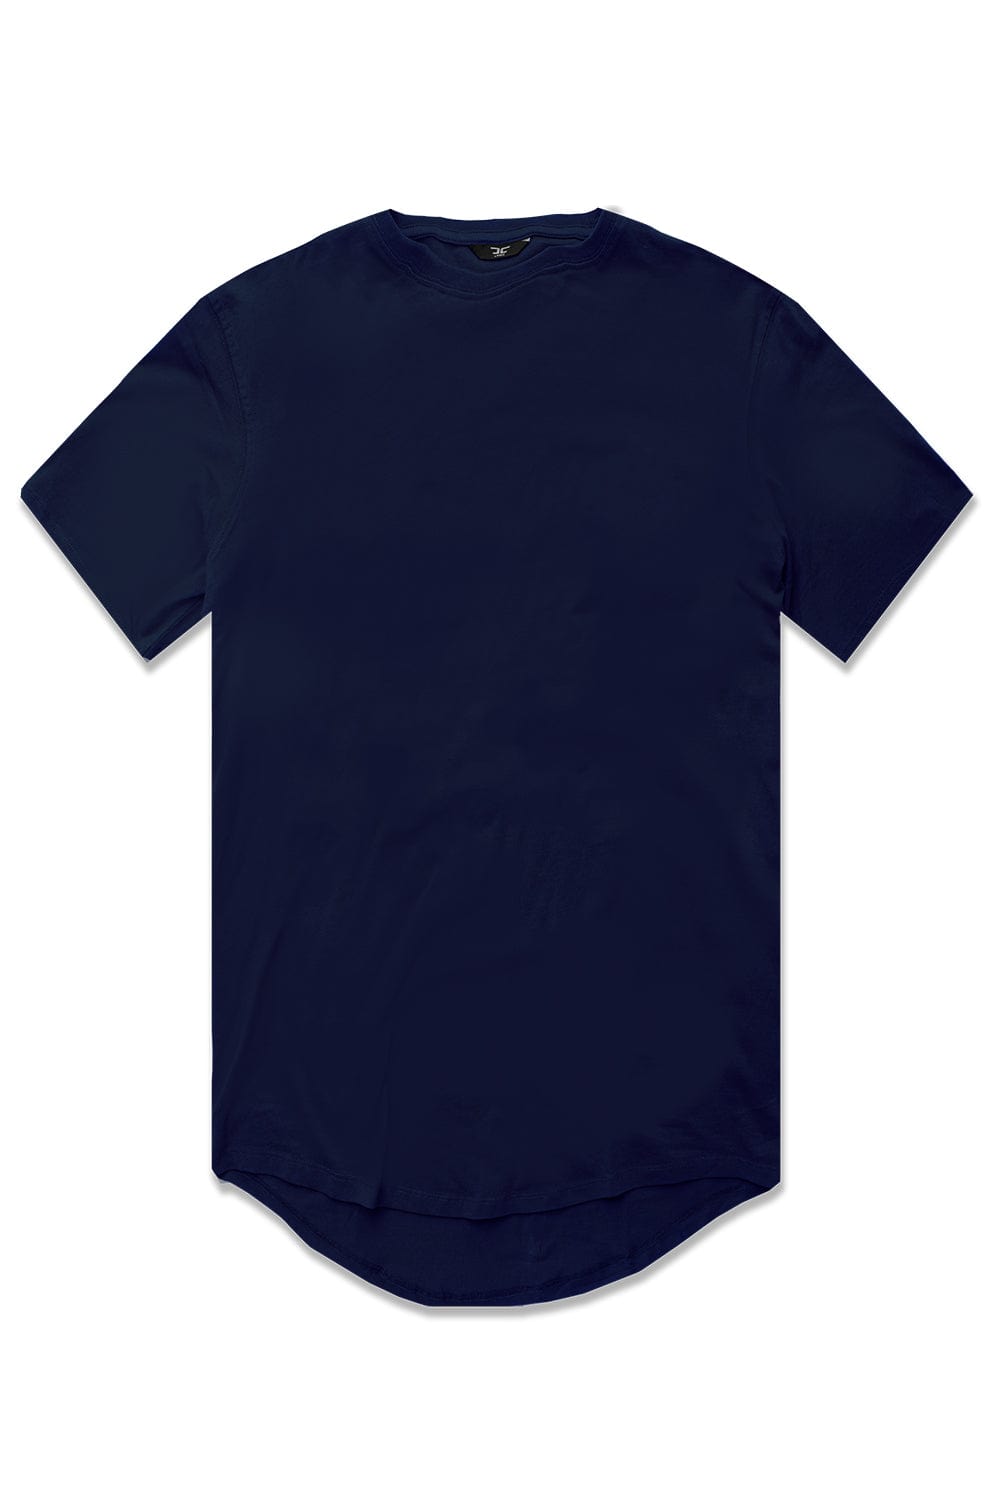 Jordan Craig Scallop T-Shirt Navy / S